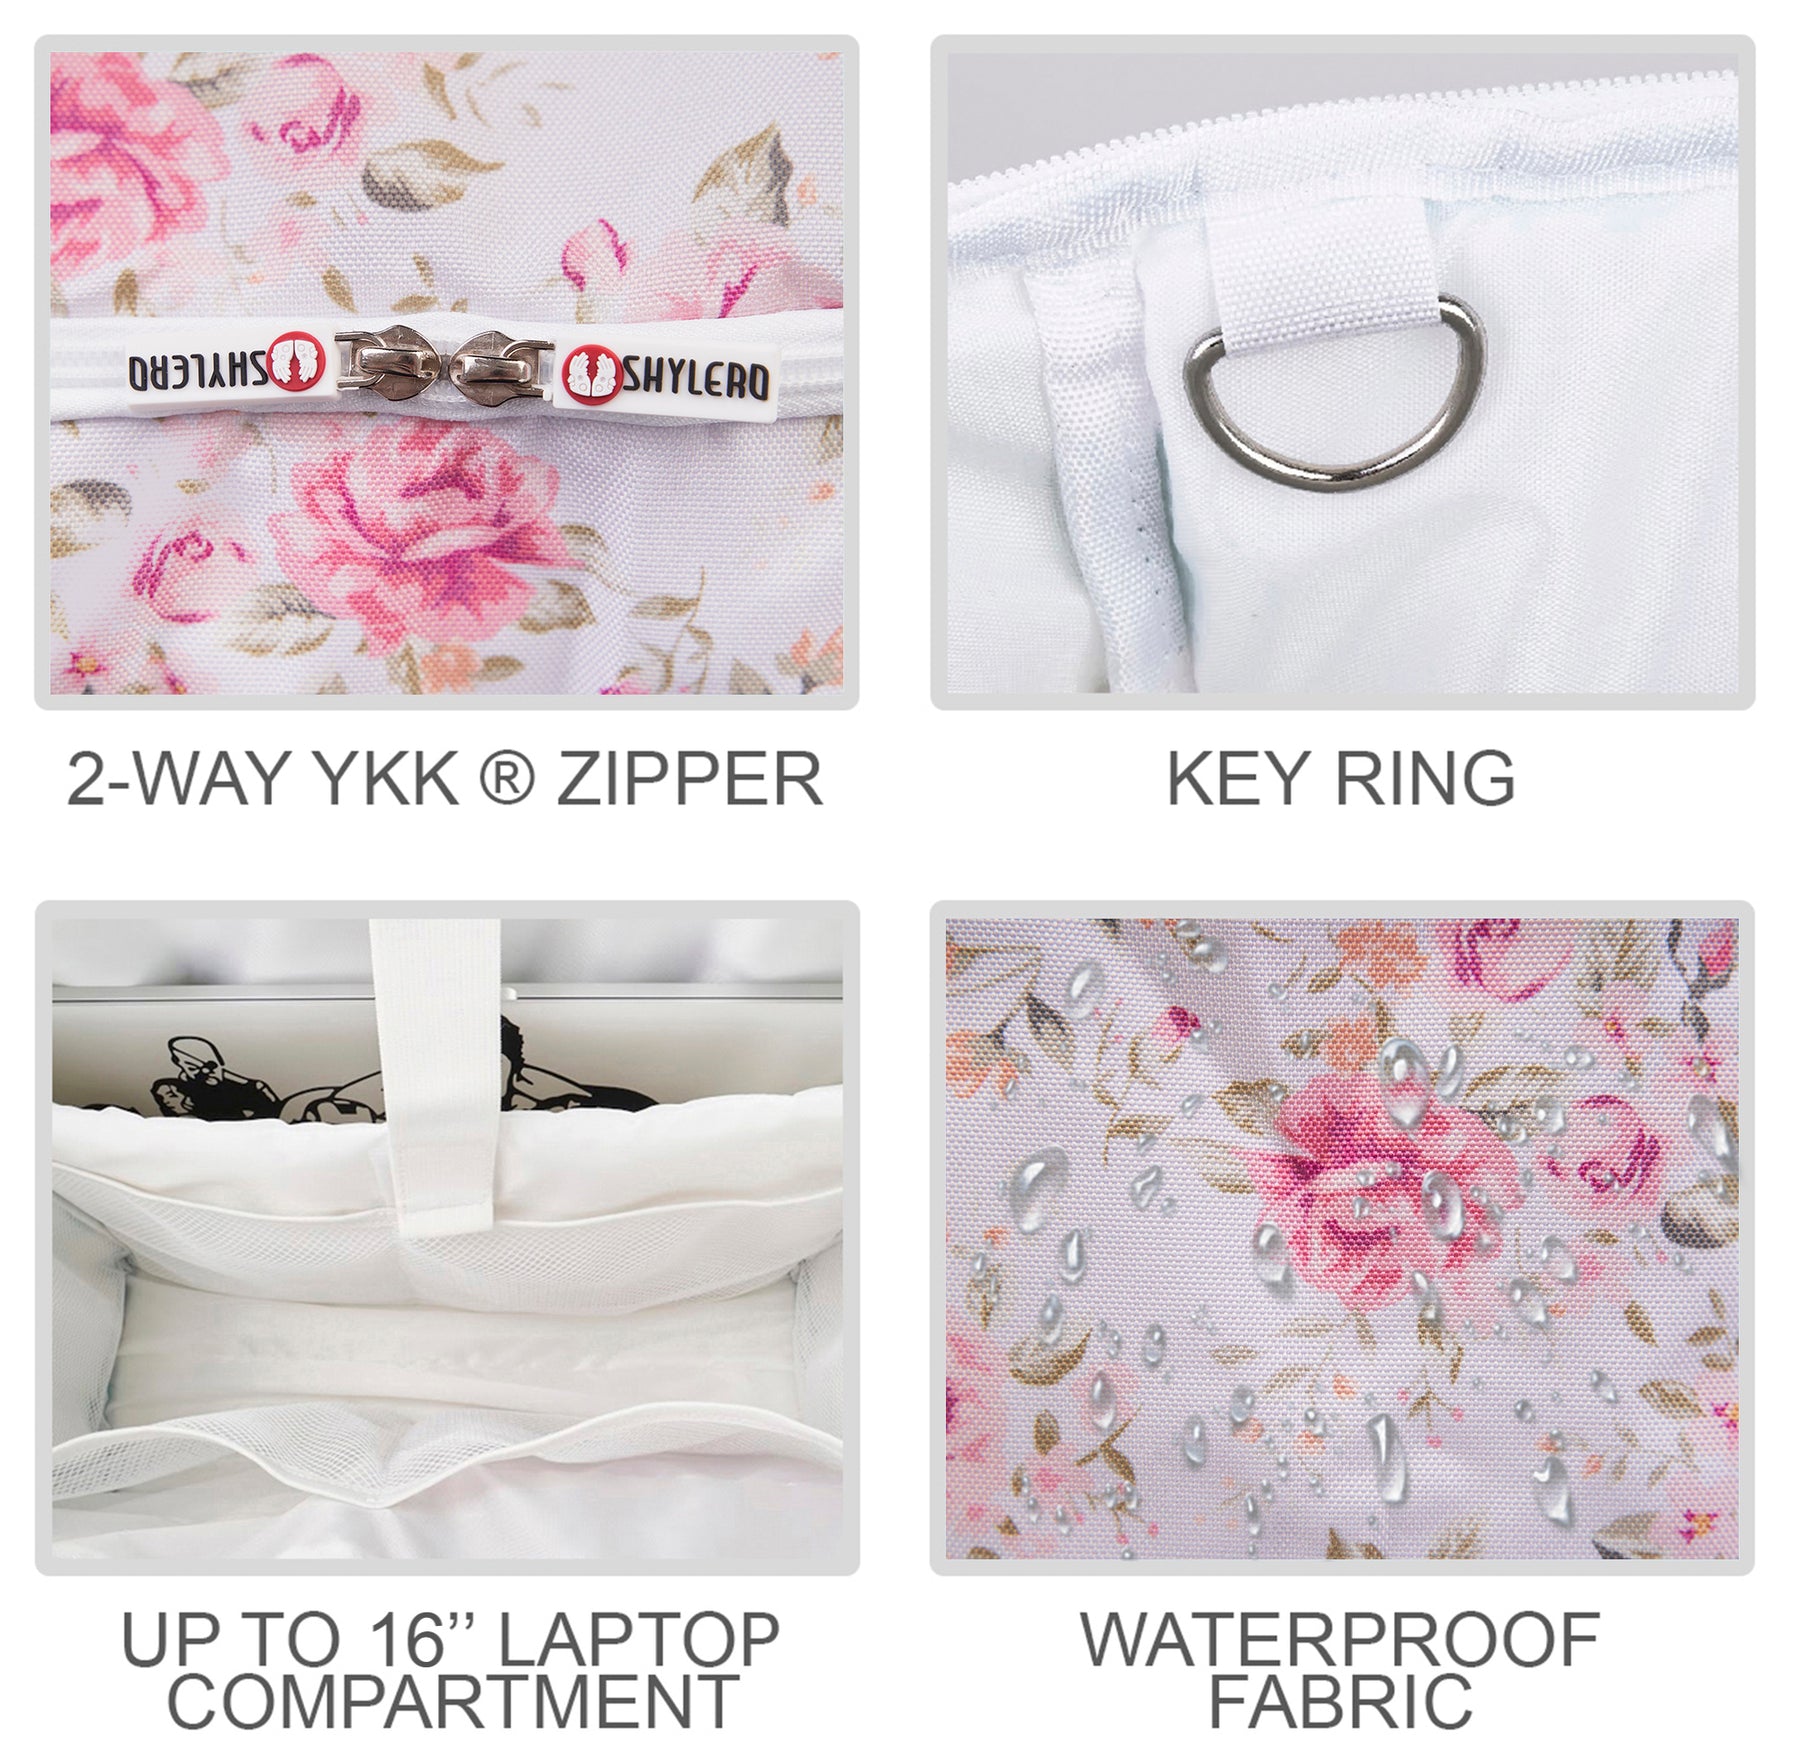 Nurse Bag and Utility Tote | Waterproof | Top YKK® Zip | L18" x H14" x W7" (46x18x36cm) | Marshmallow Roses